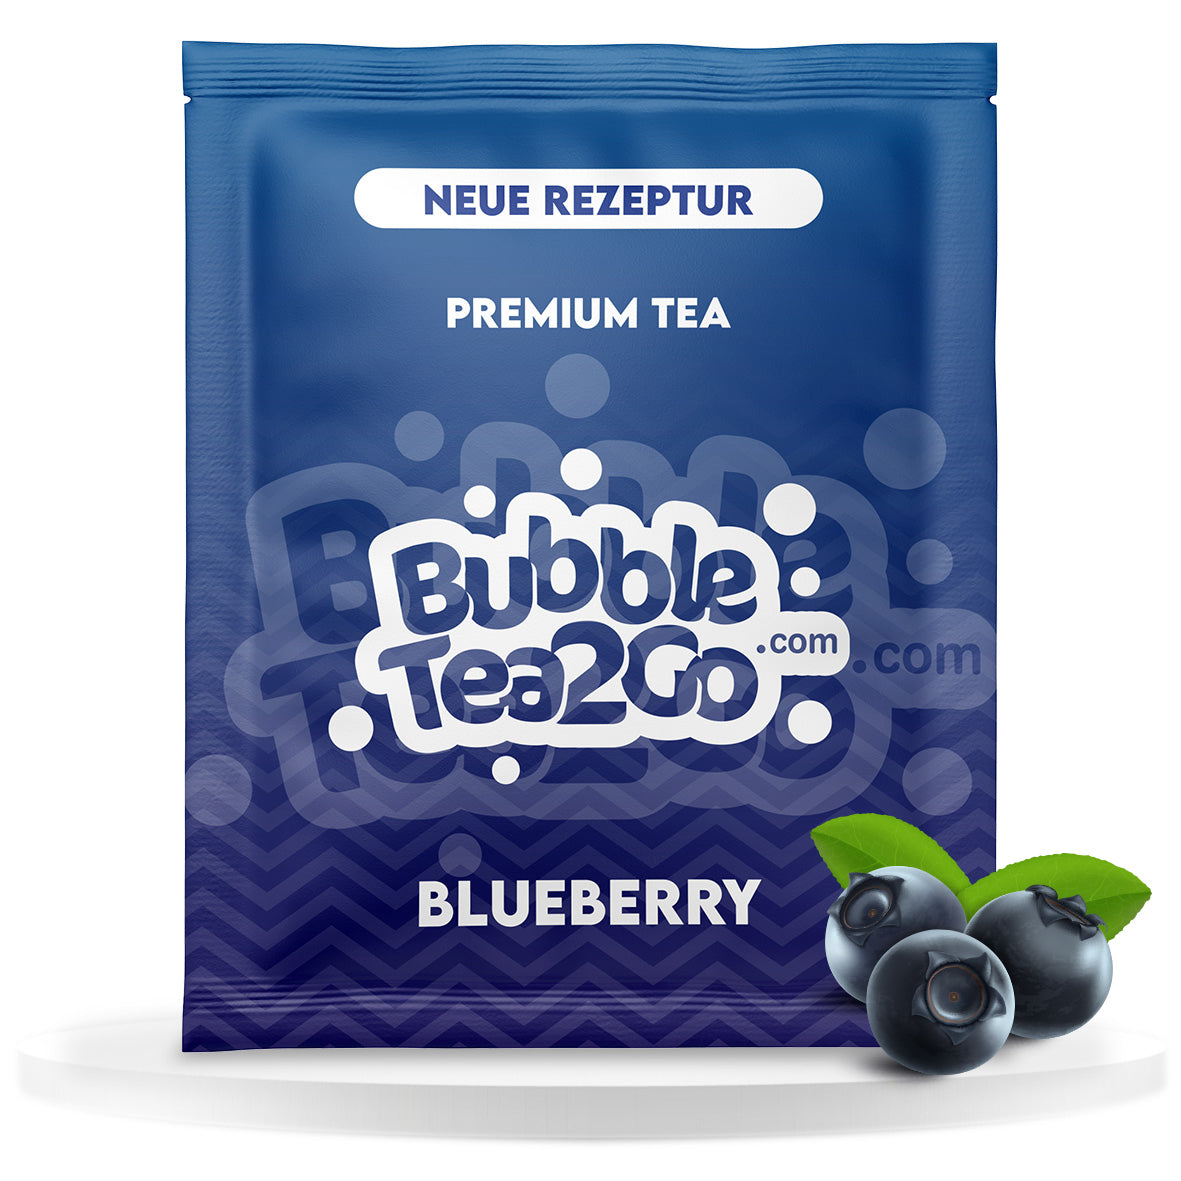 Premium Tea - Blueberry